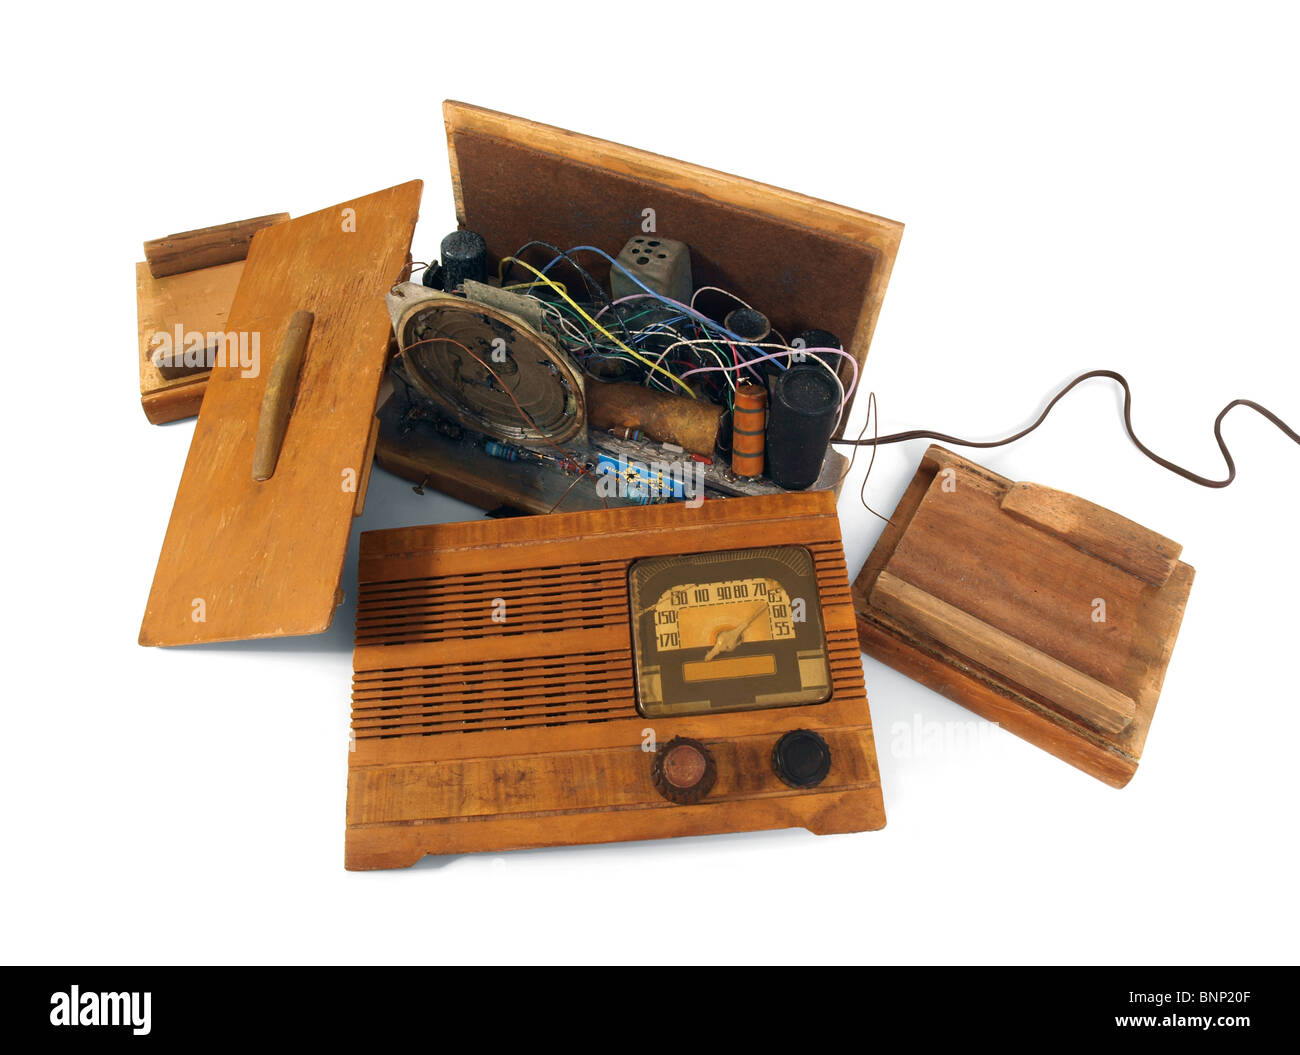 Vintage art deco radio. Smashed to pieces. Stock Photo